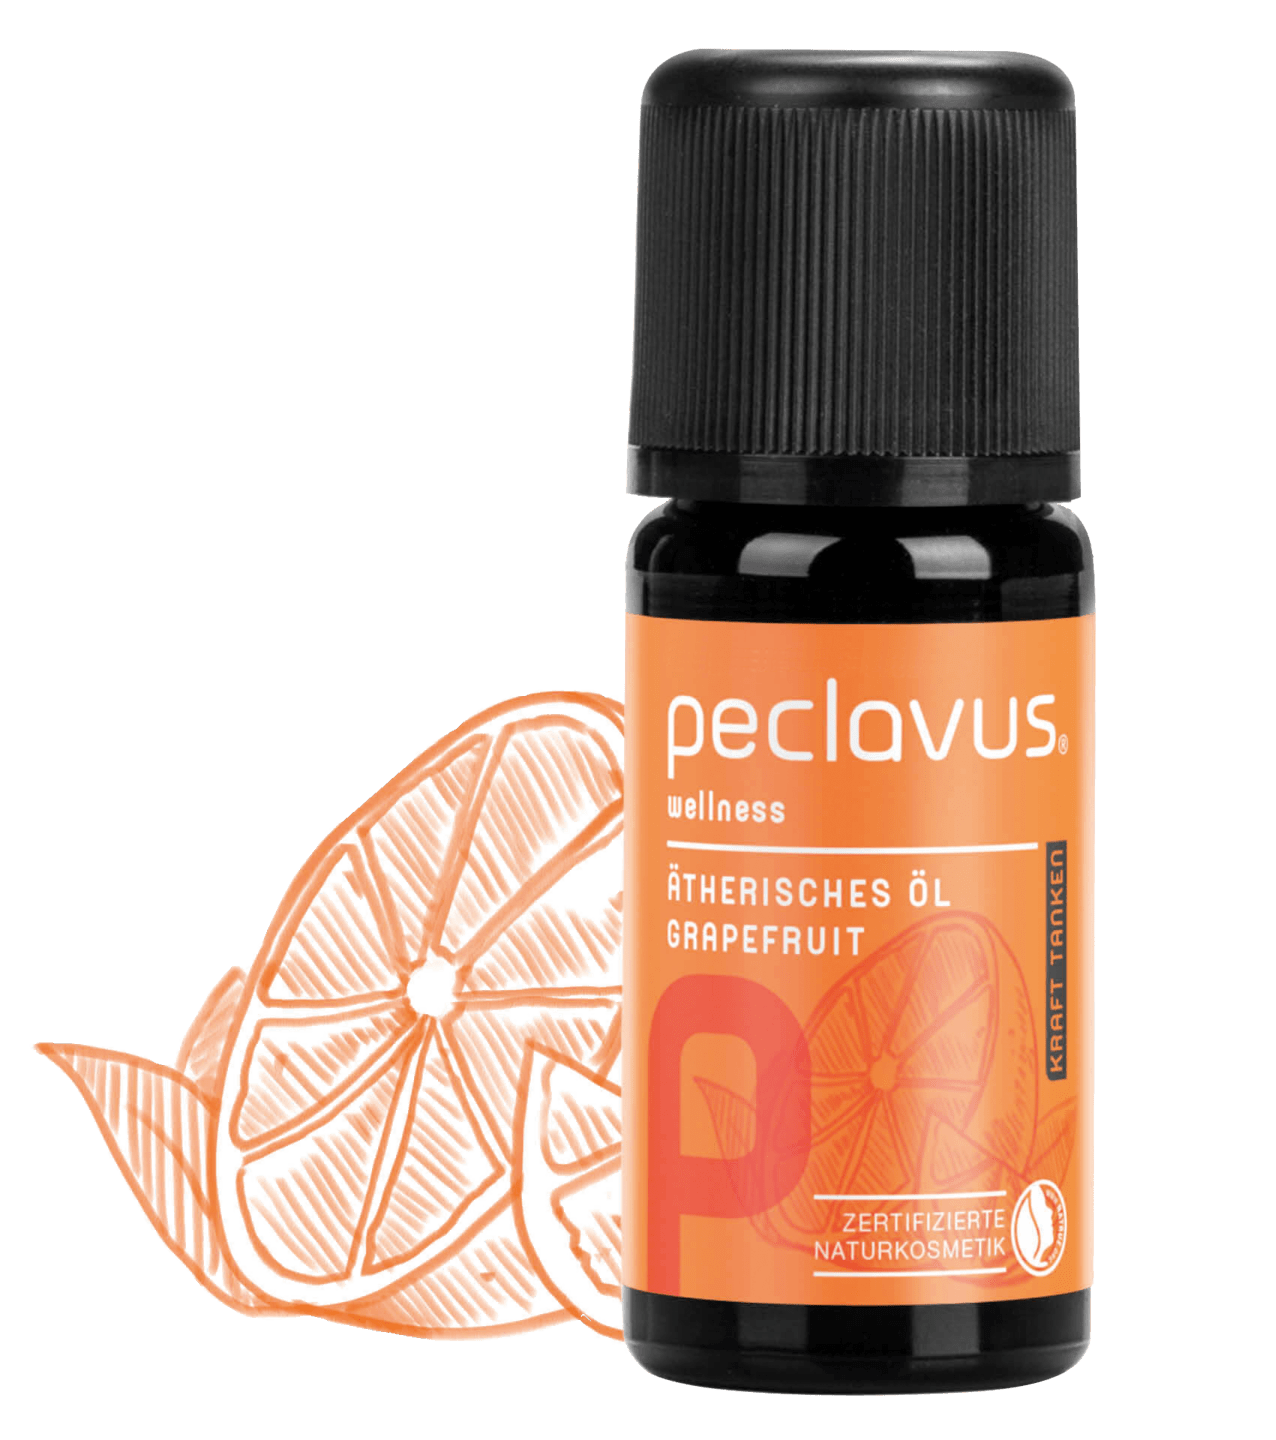 peclavus - Ätherisches Öl Grapefruit, 10 ml